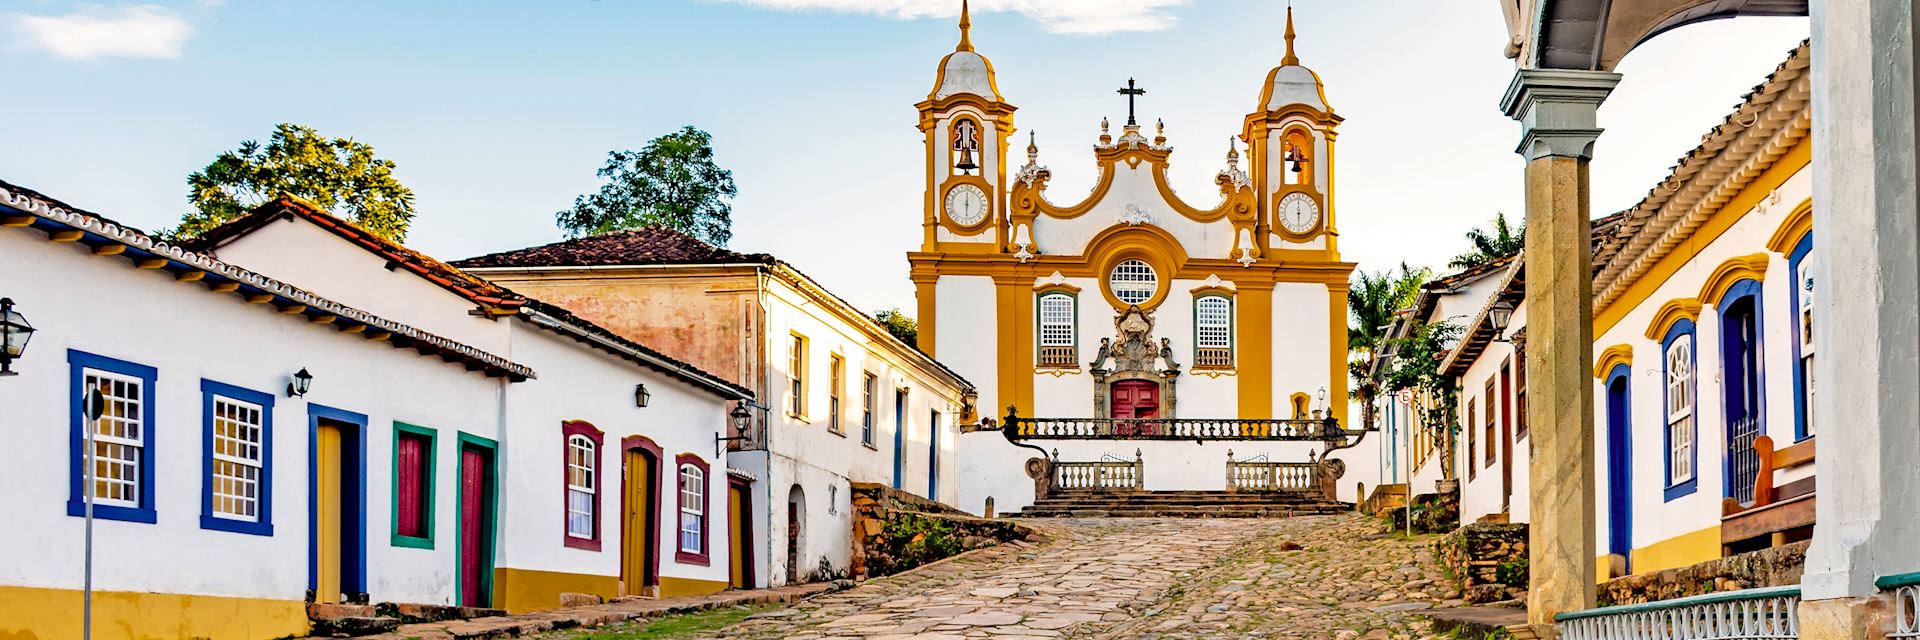 Church in Tiradentes